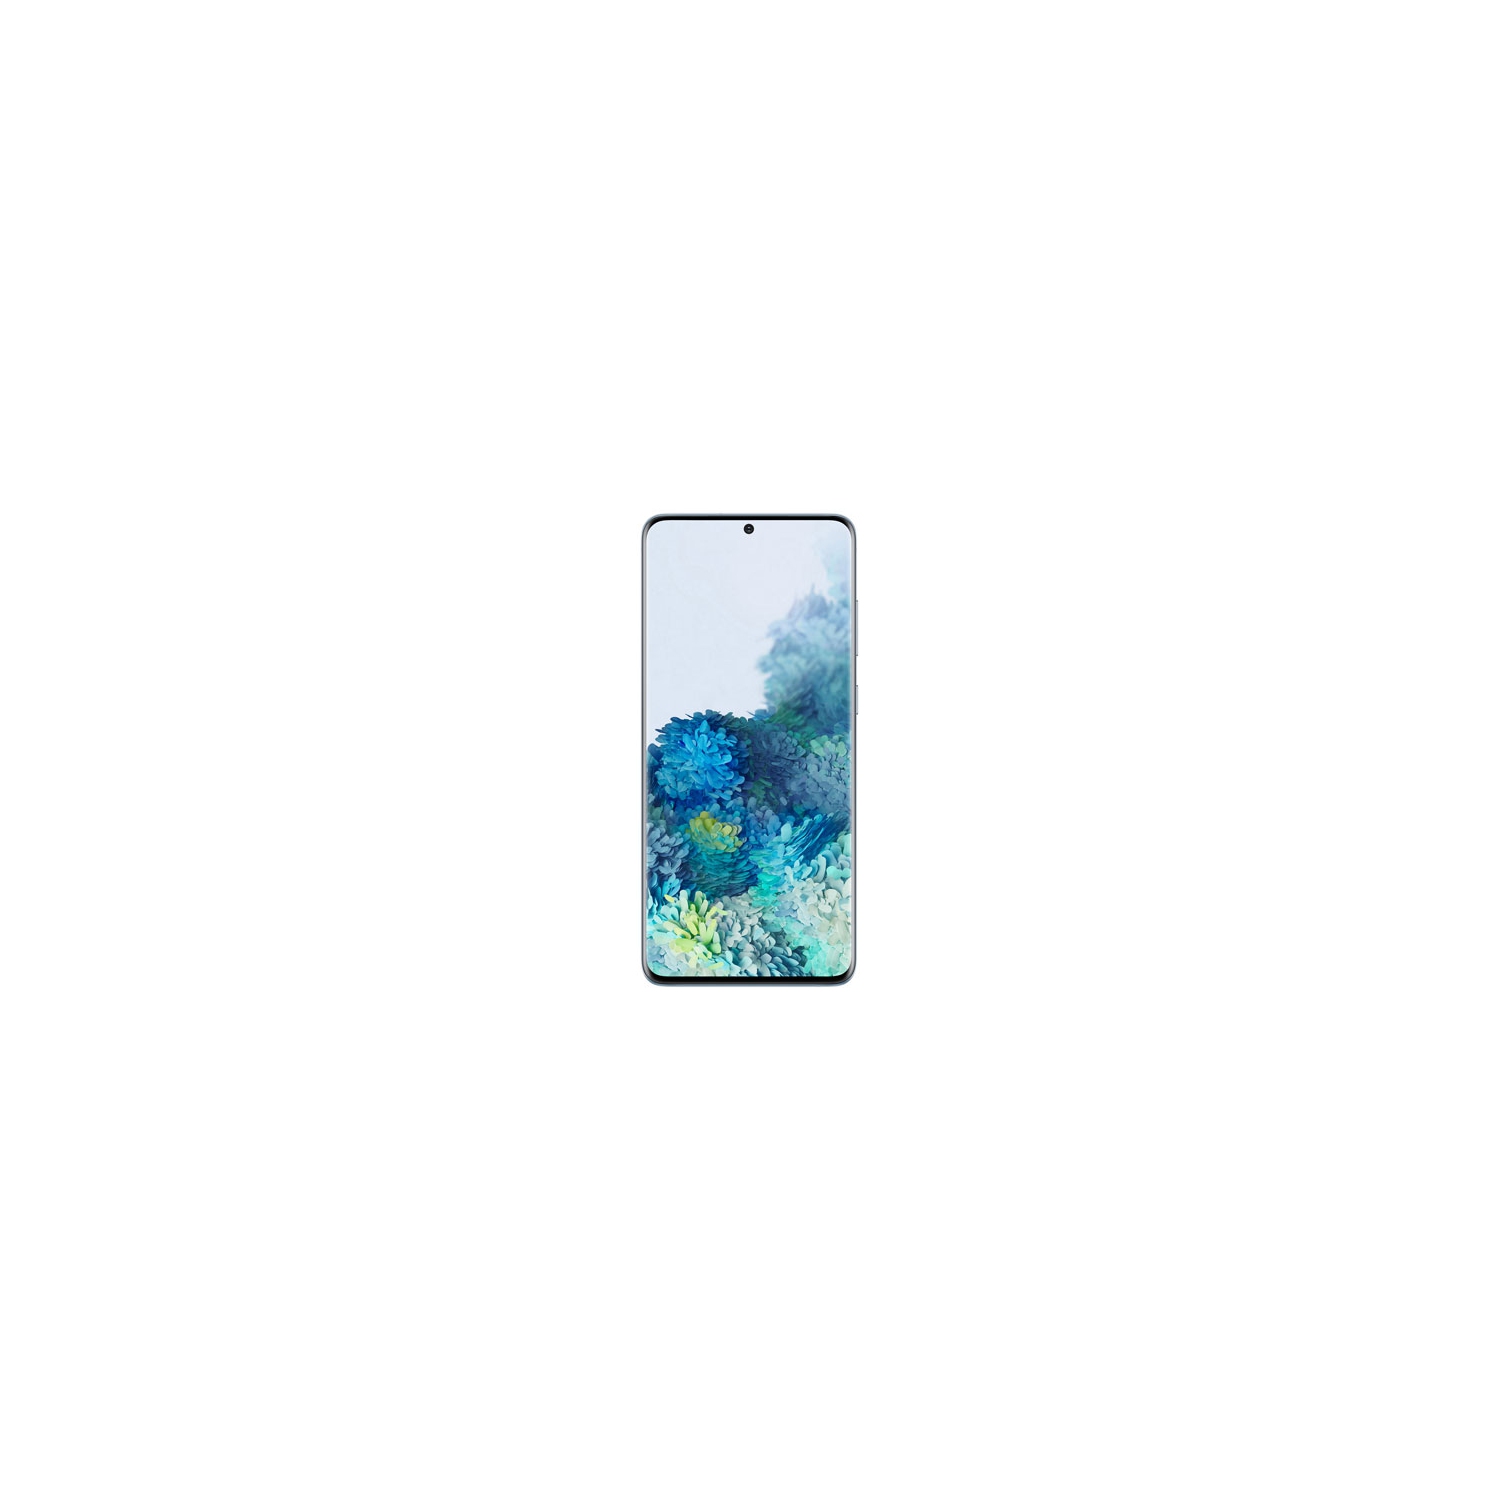 Samsung Galaxy S20+ (Plus) 5G 128GB Smartphone - Cloud Blue - Unlocked - Open Box